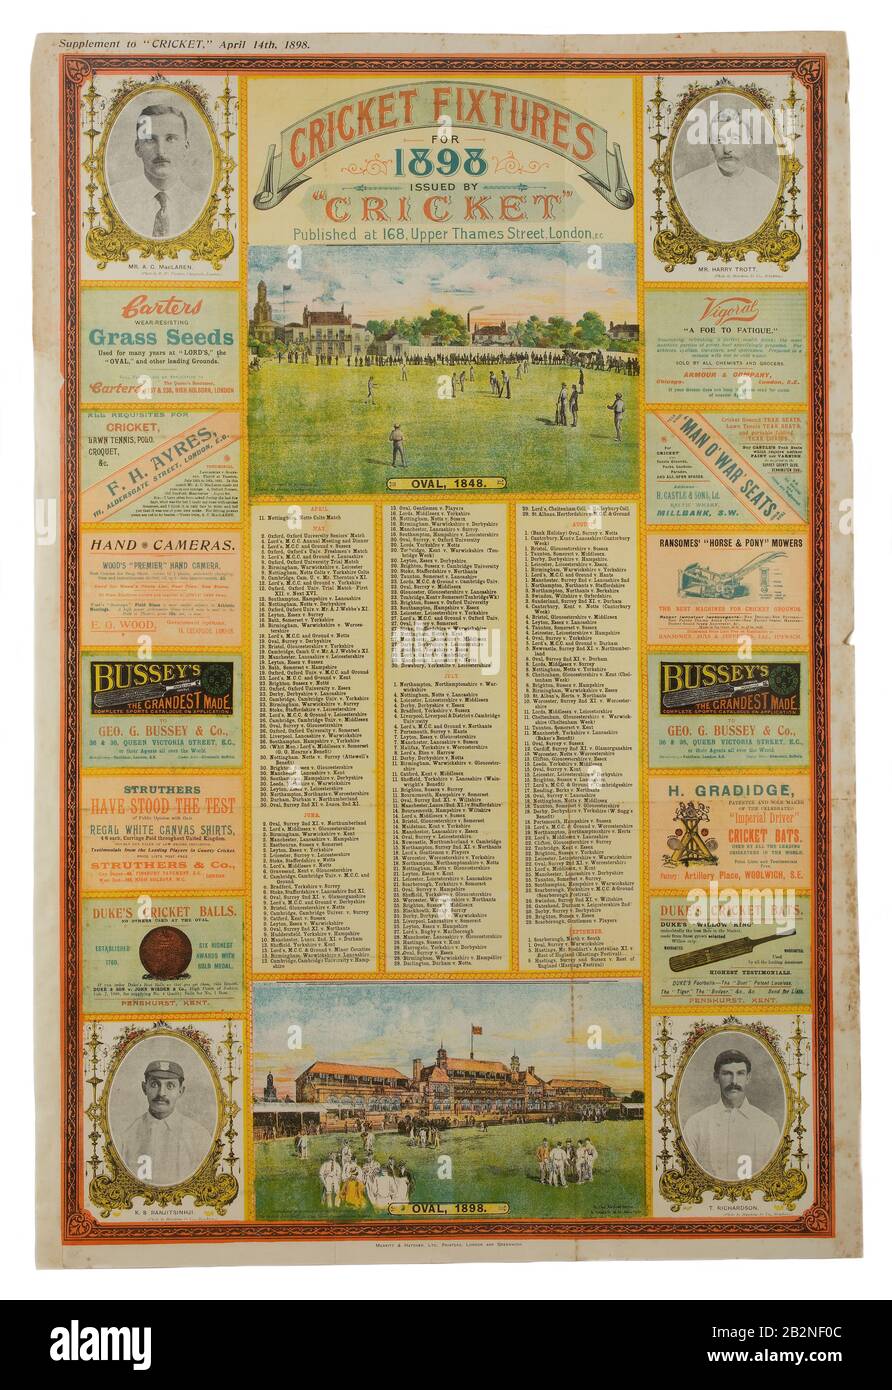 1898 Cricket Fixtures poster Stock Photo